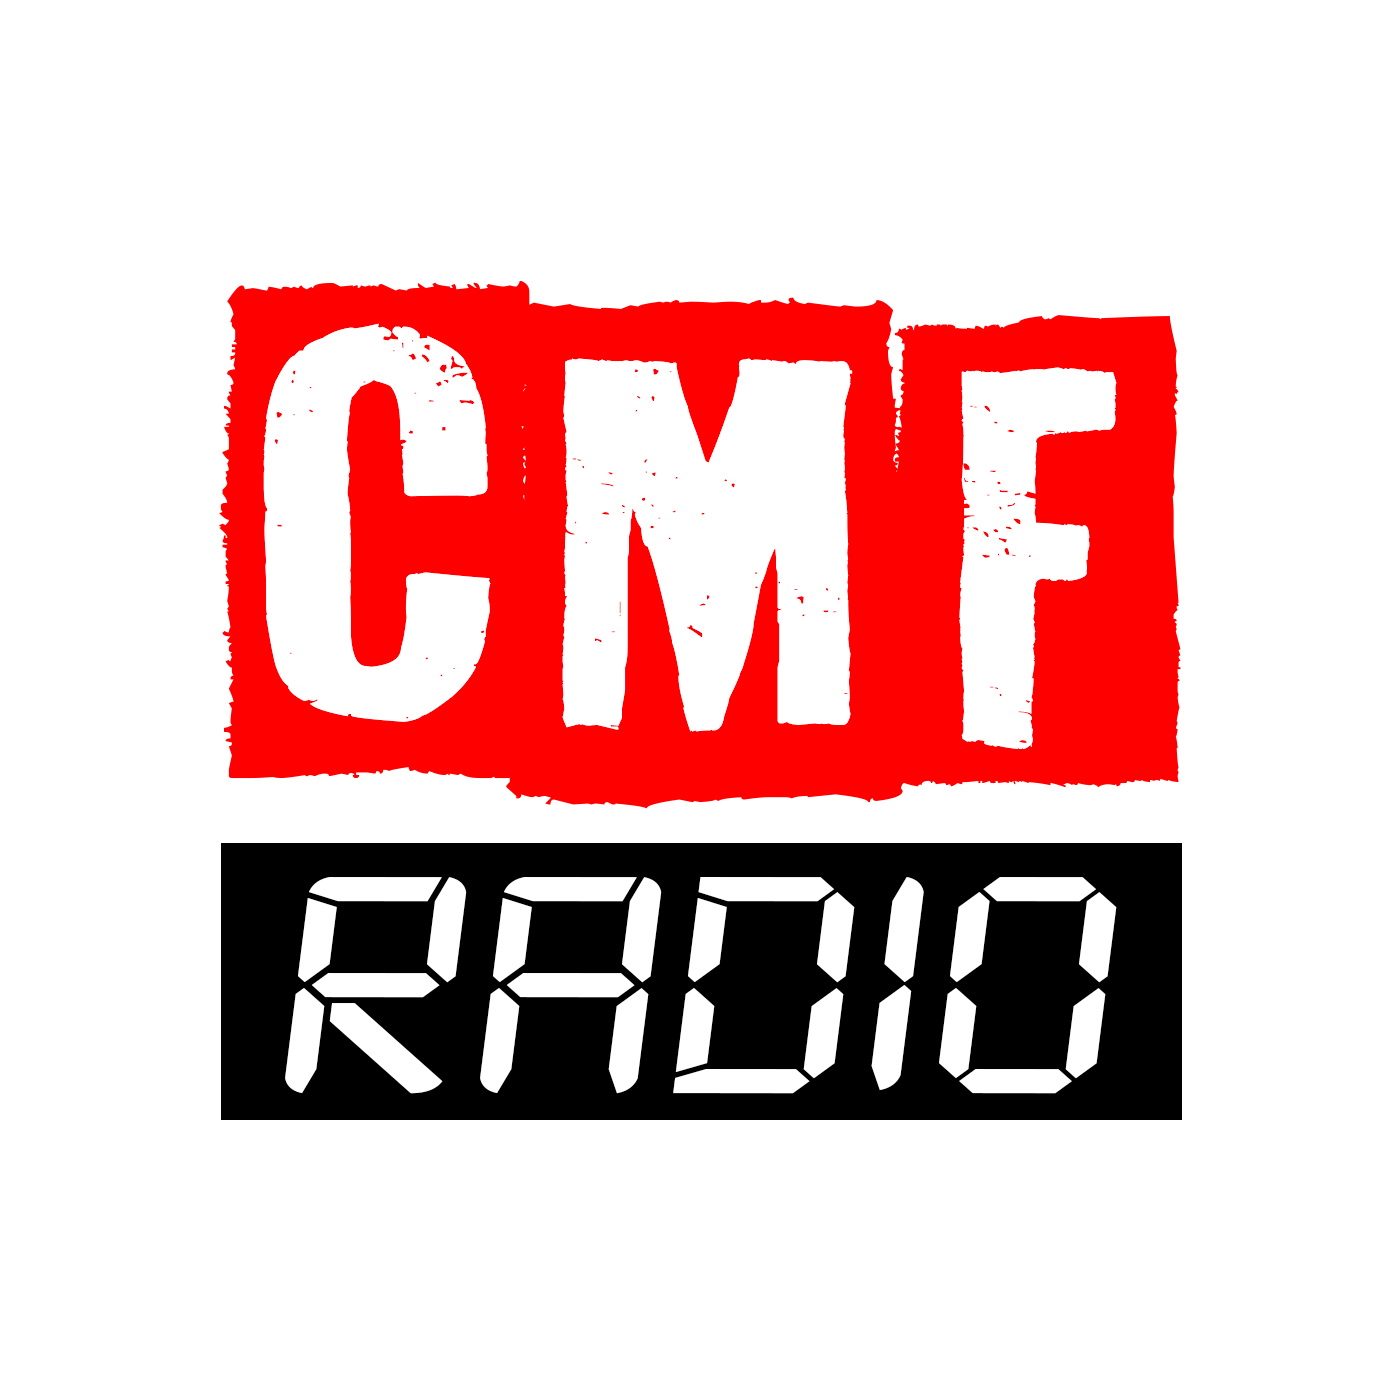 CMF RADIO LOGO